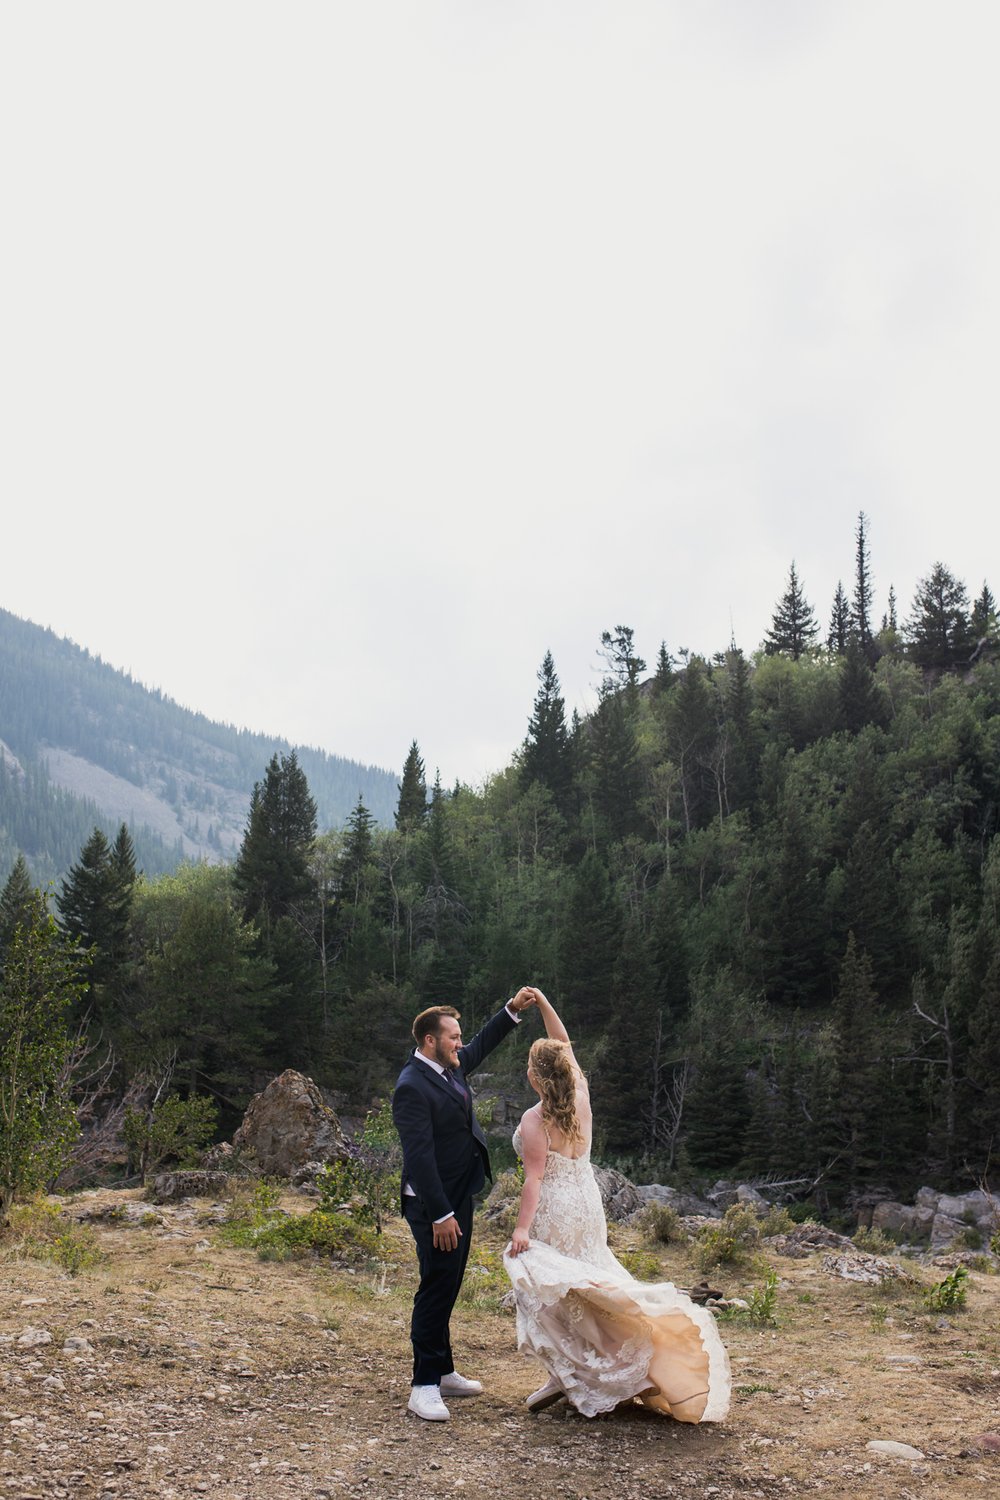 Intimate_Mountain_Wedding_Photography-1053.jpg